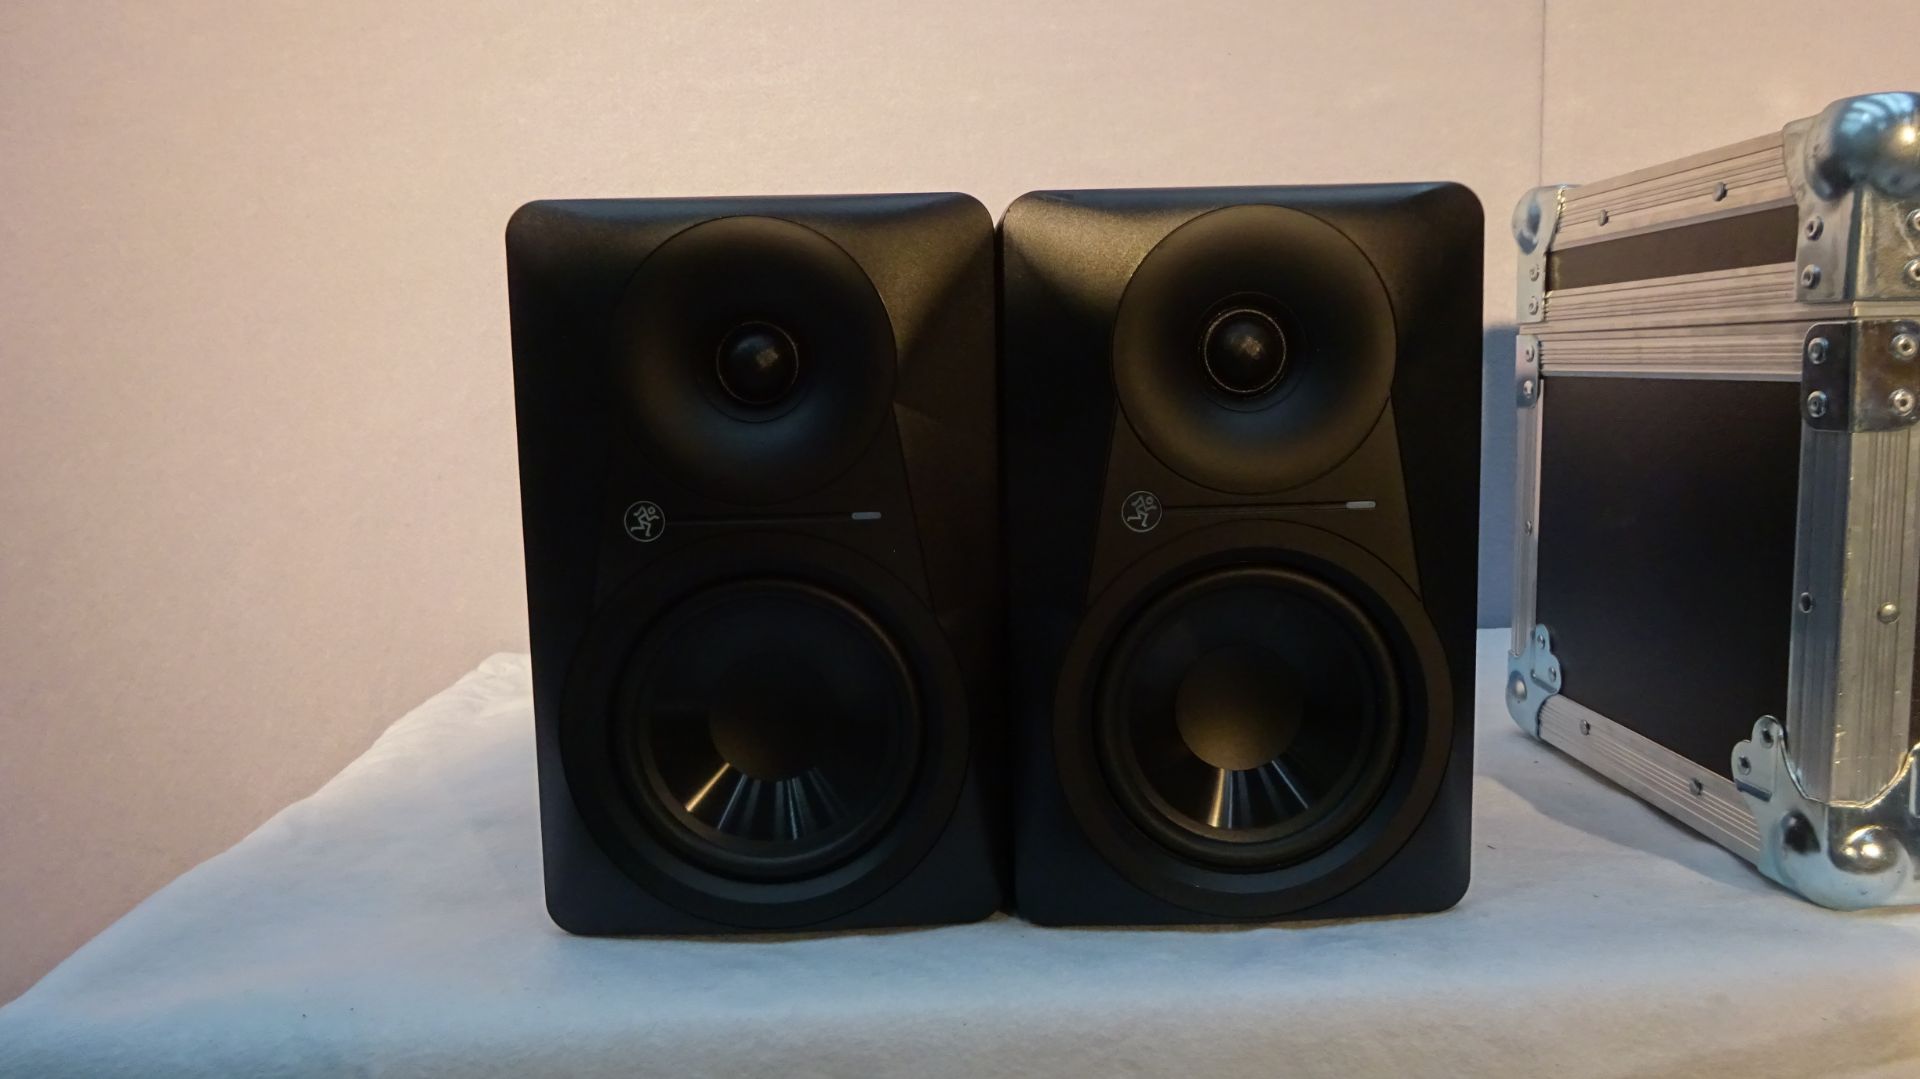 2 x MR524 Powered Studio Monitor Speaker c/w 2 Flights Cases VERY LITTLE USE - Image 3 of 11